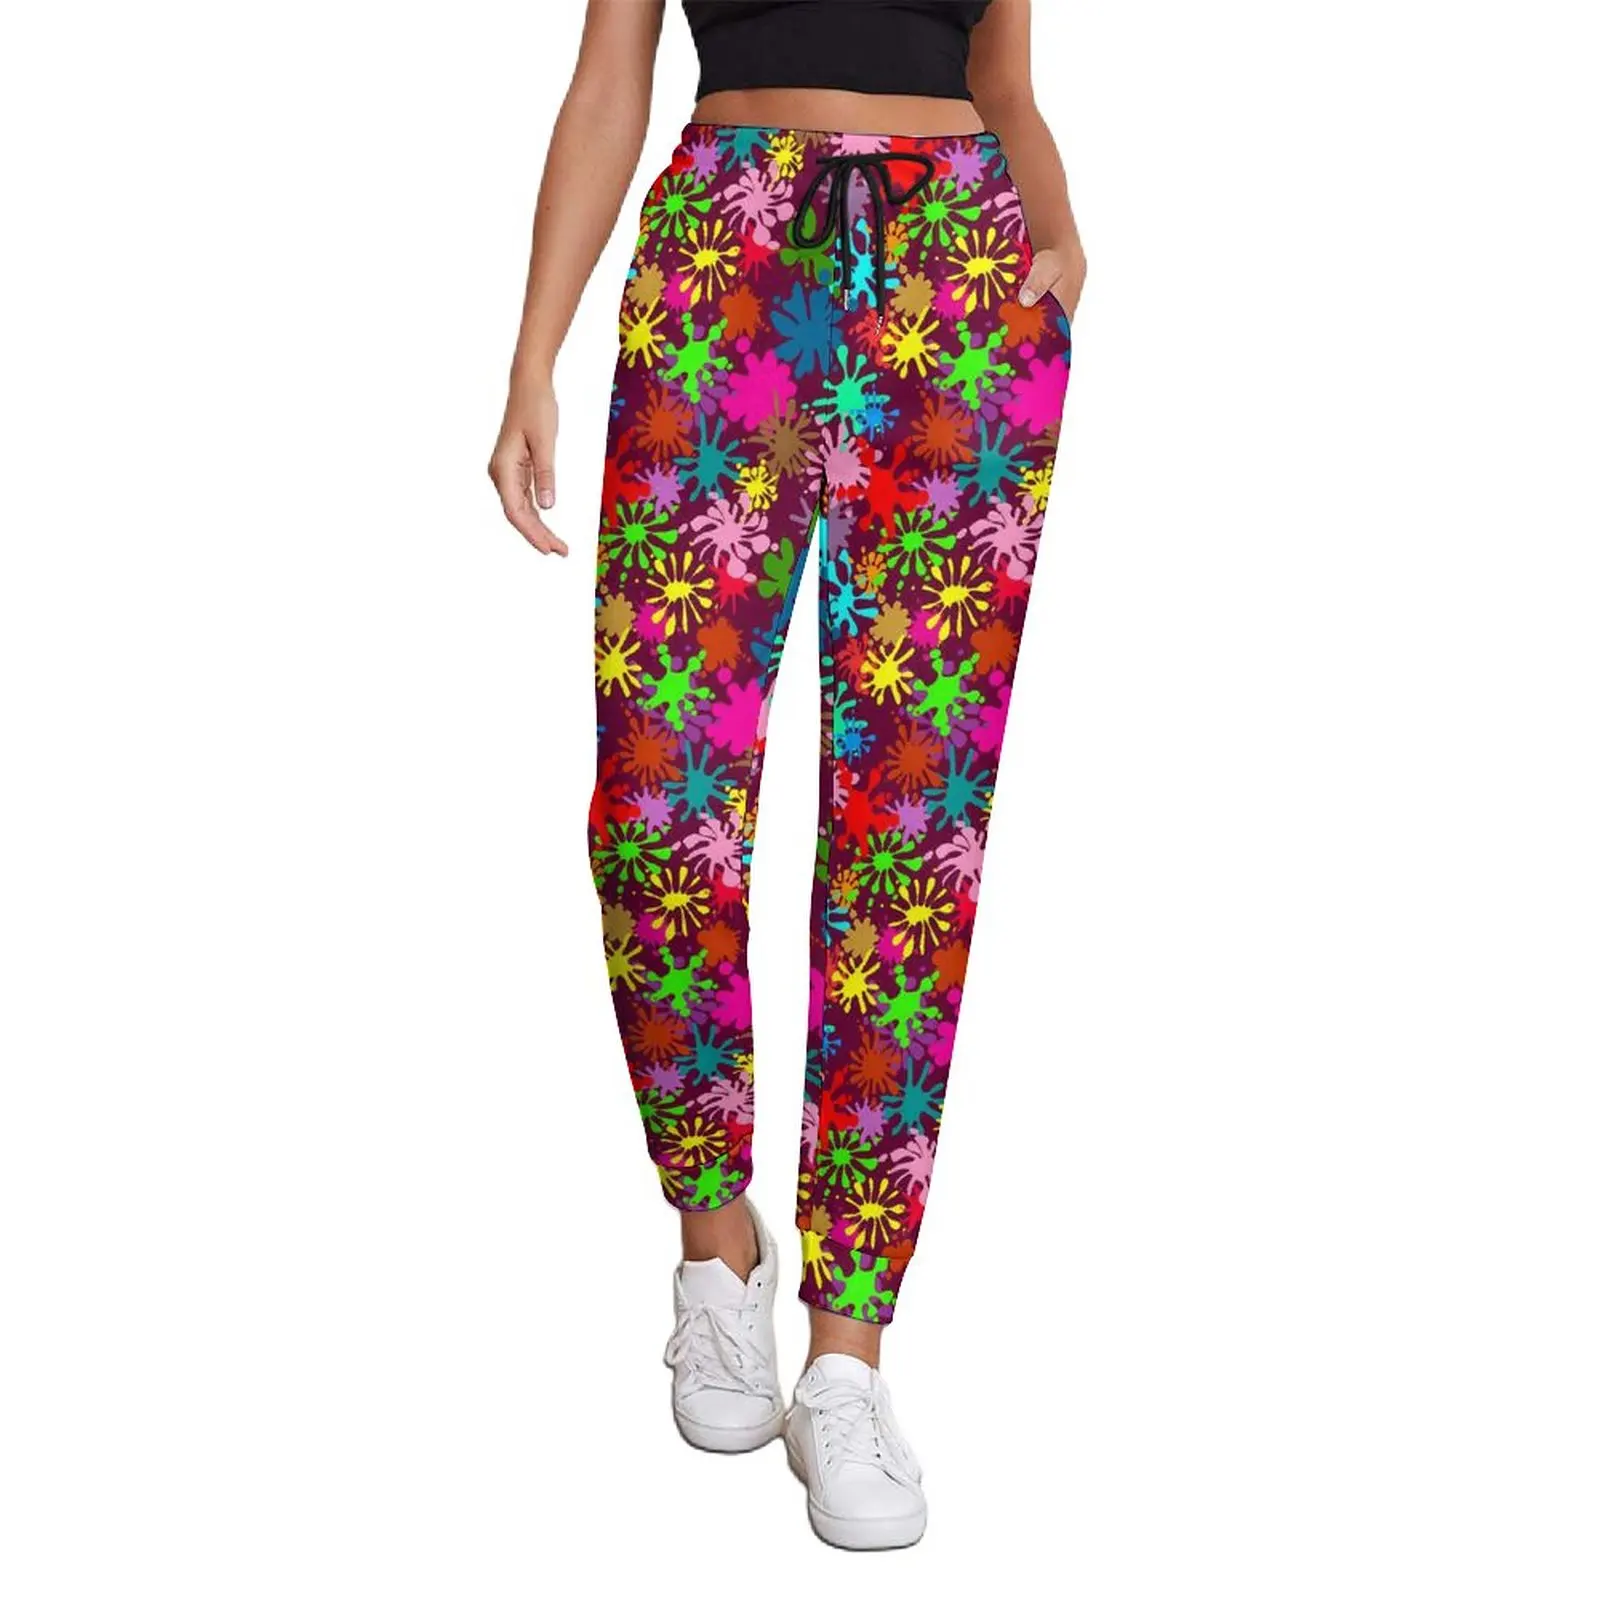 

Neon Paint Baggy Pants Spring Cute Splatters Print Elegant Sweatpants Female Street Style Graphic Trousers Big Size